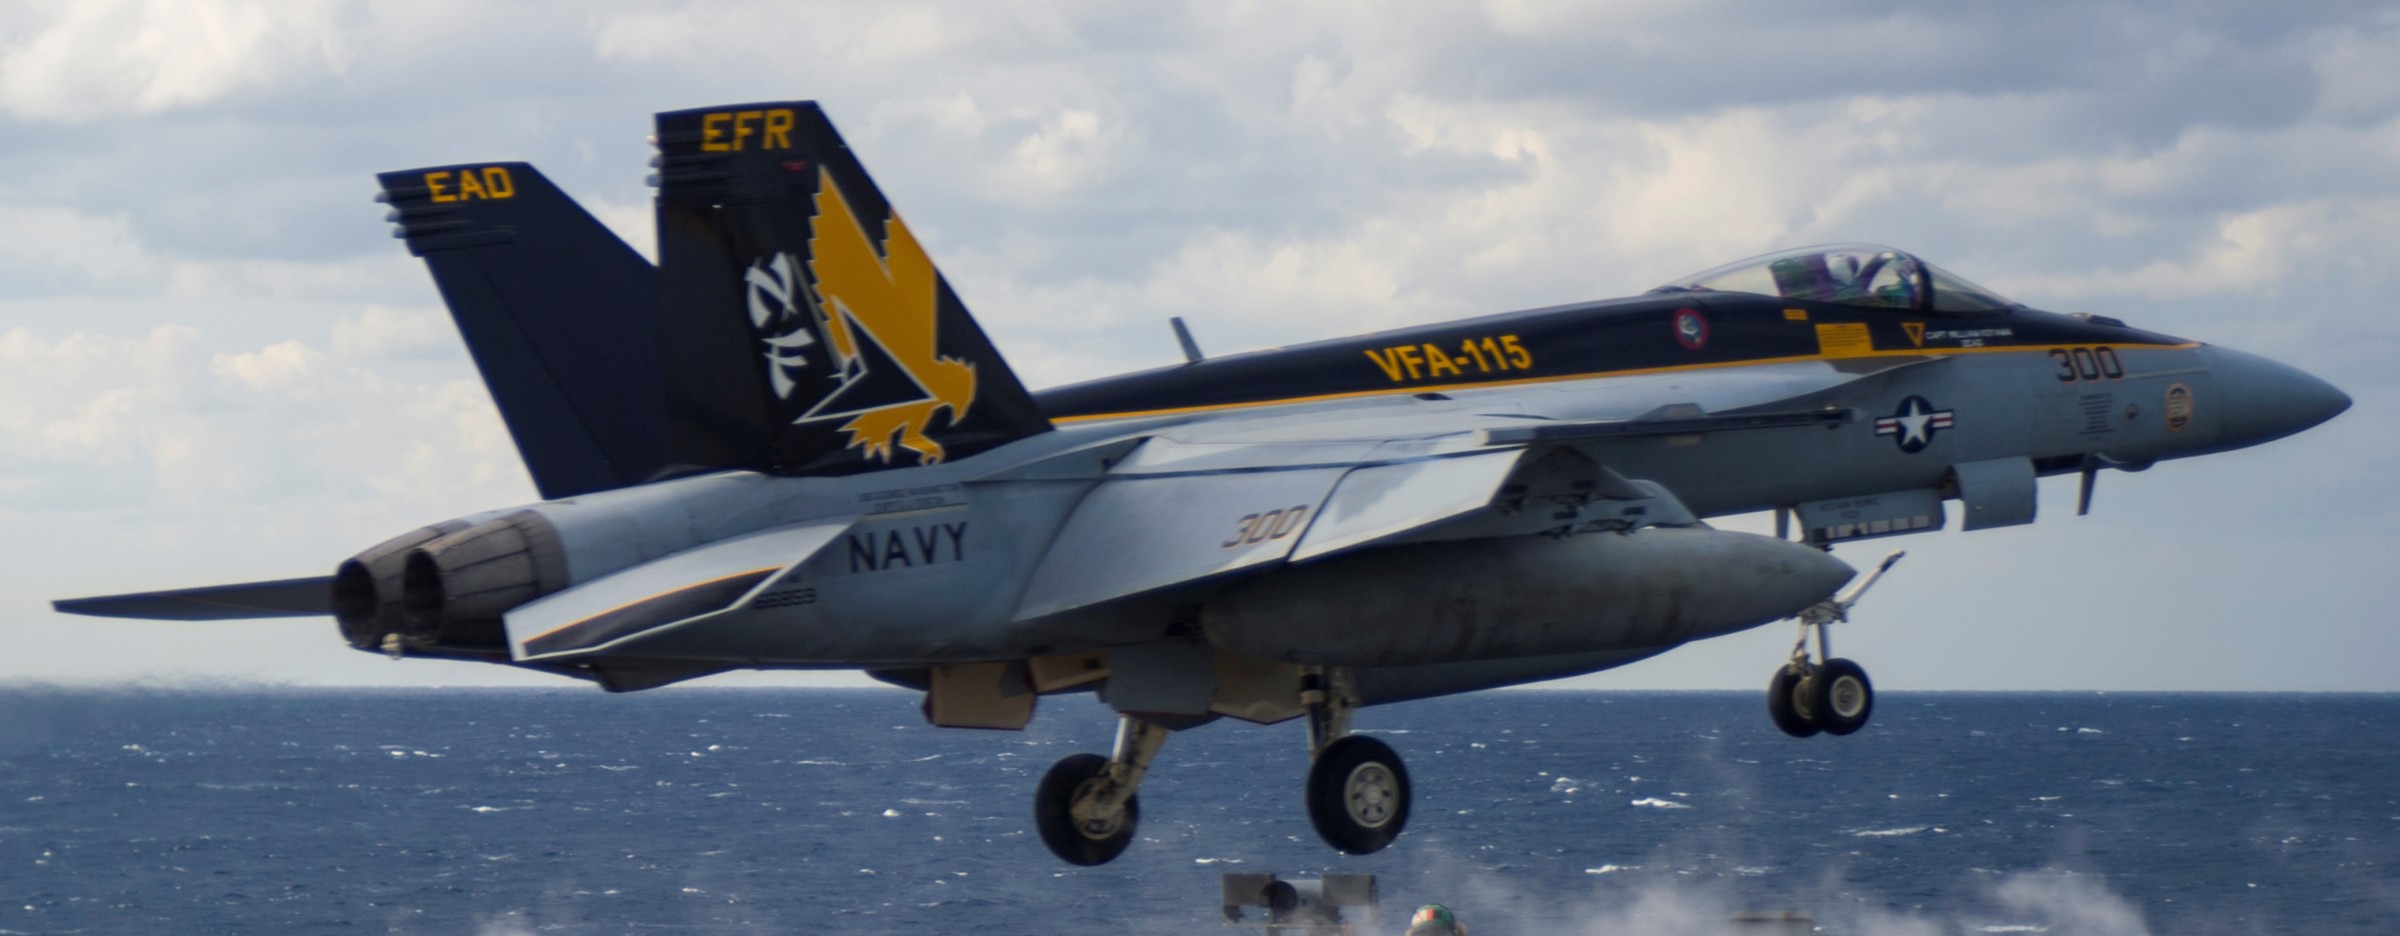 vfa-115 eagles strike fighter squadron f/a-18e super hornet cvw-5 uss george washington cvn-73 2013 27